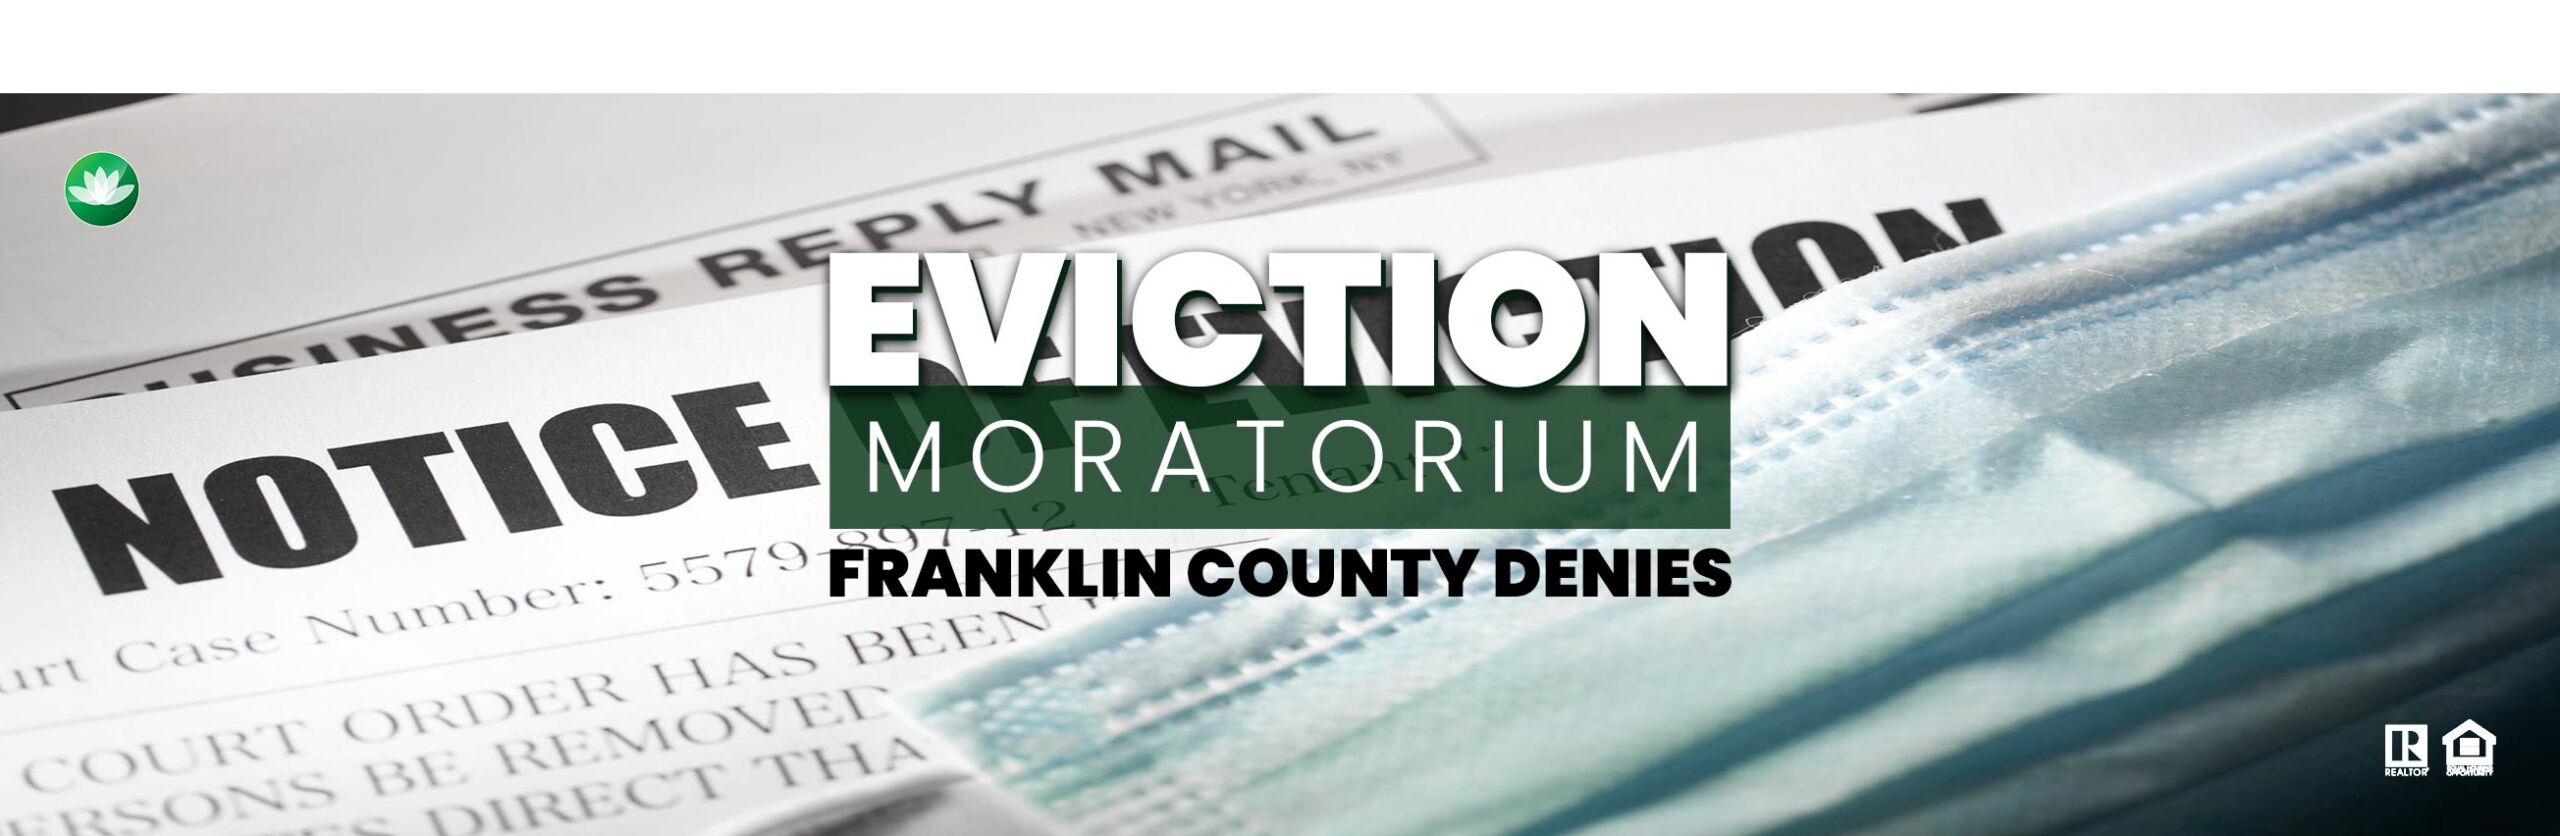 Eviction Moratorium Denied